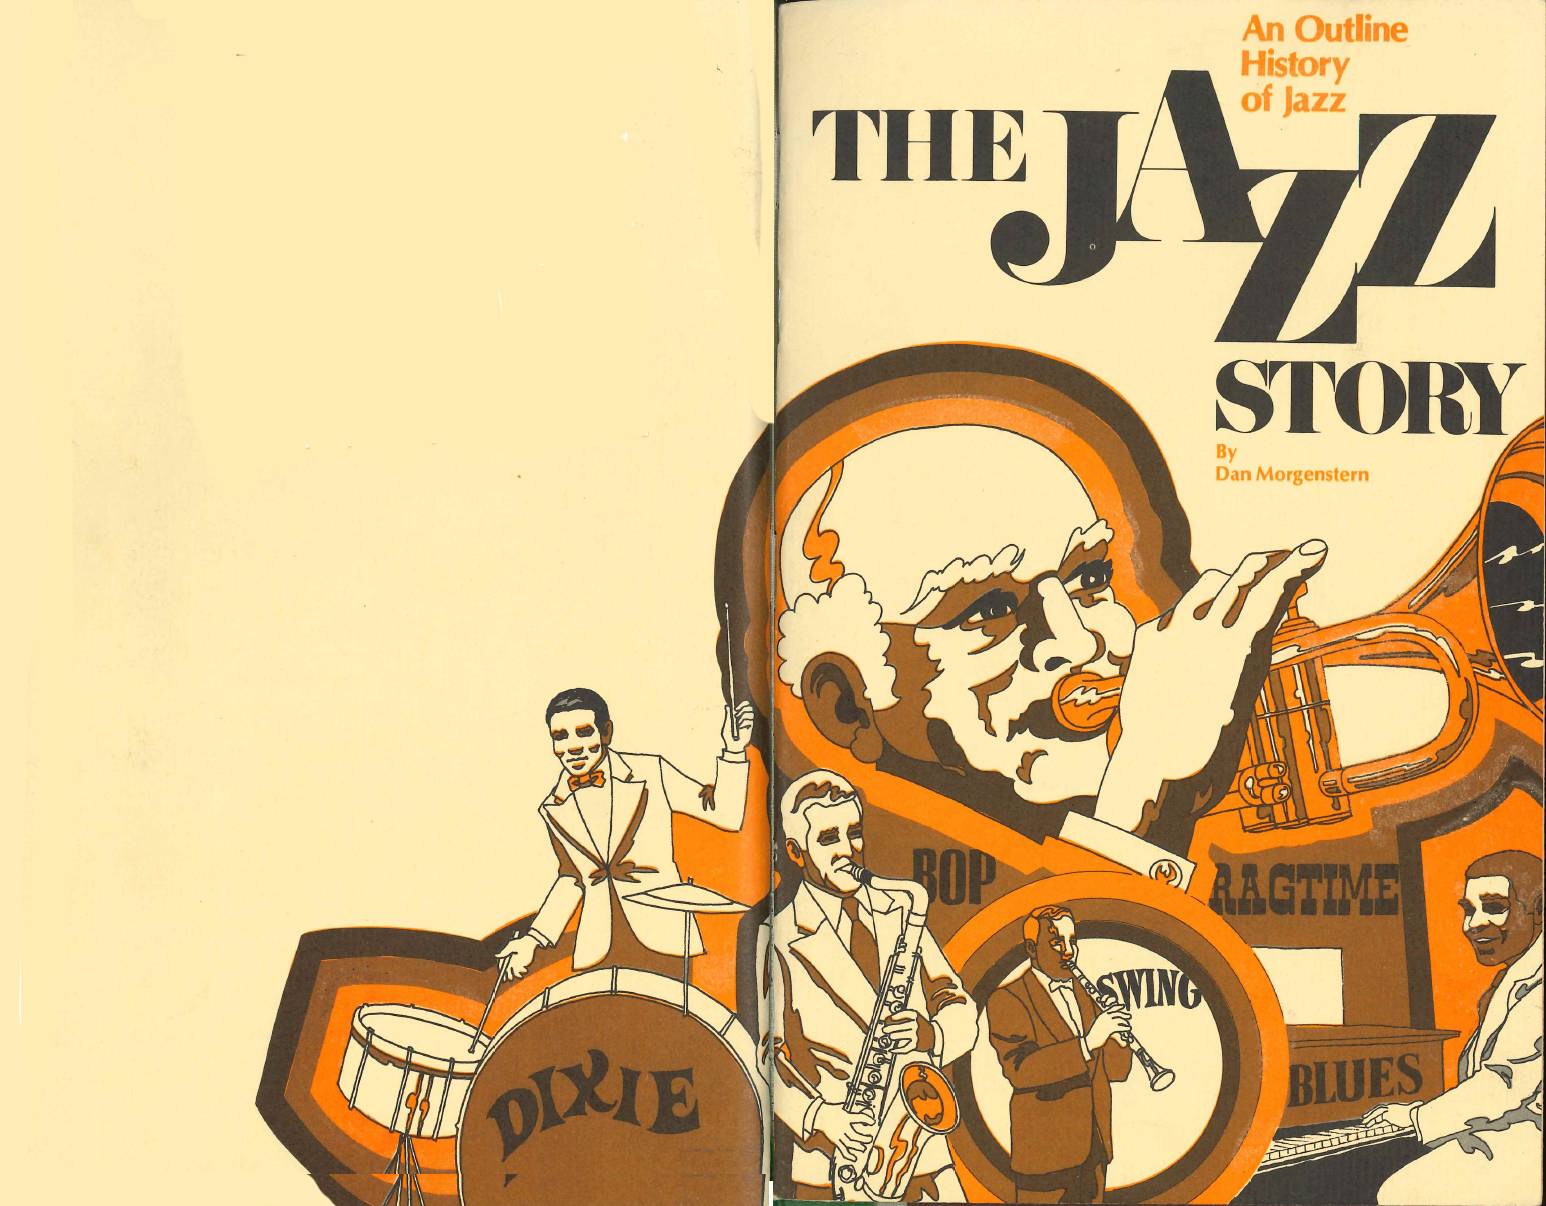 The Jazz Story